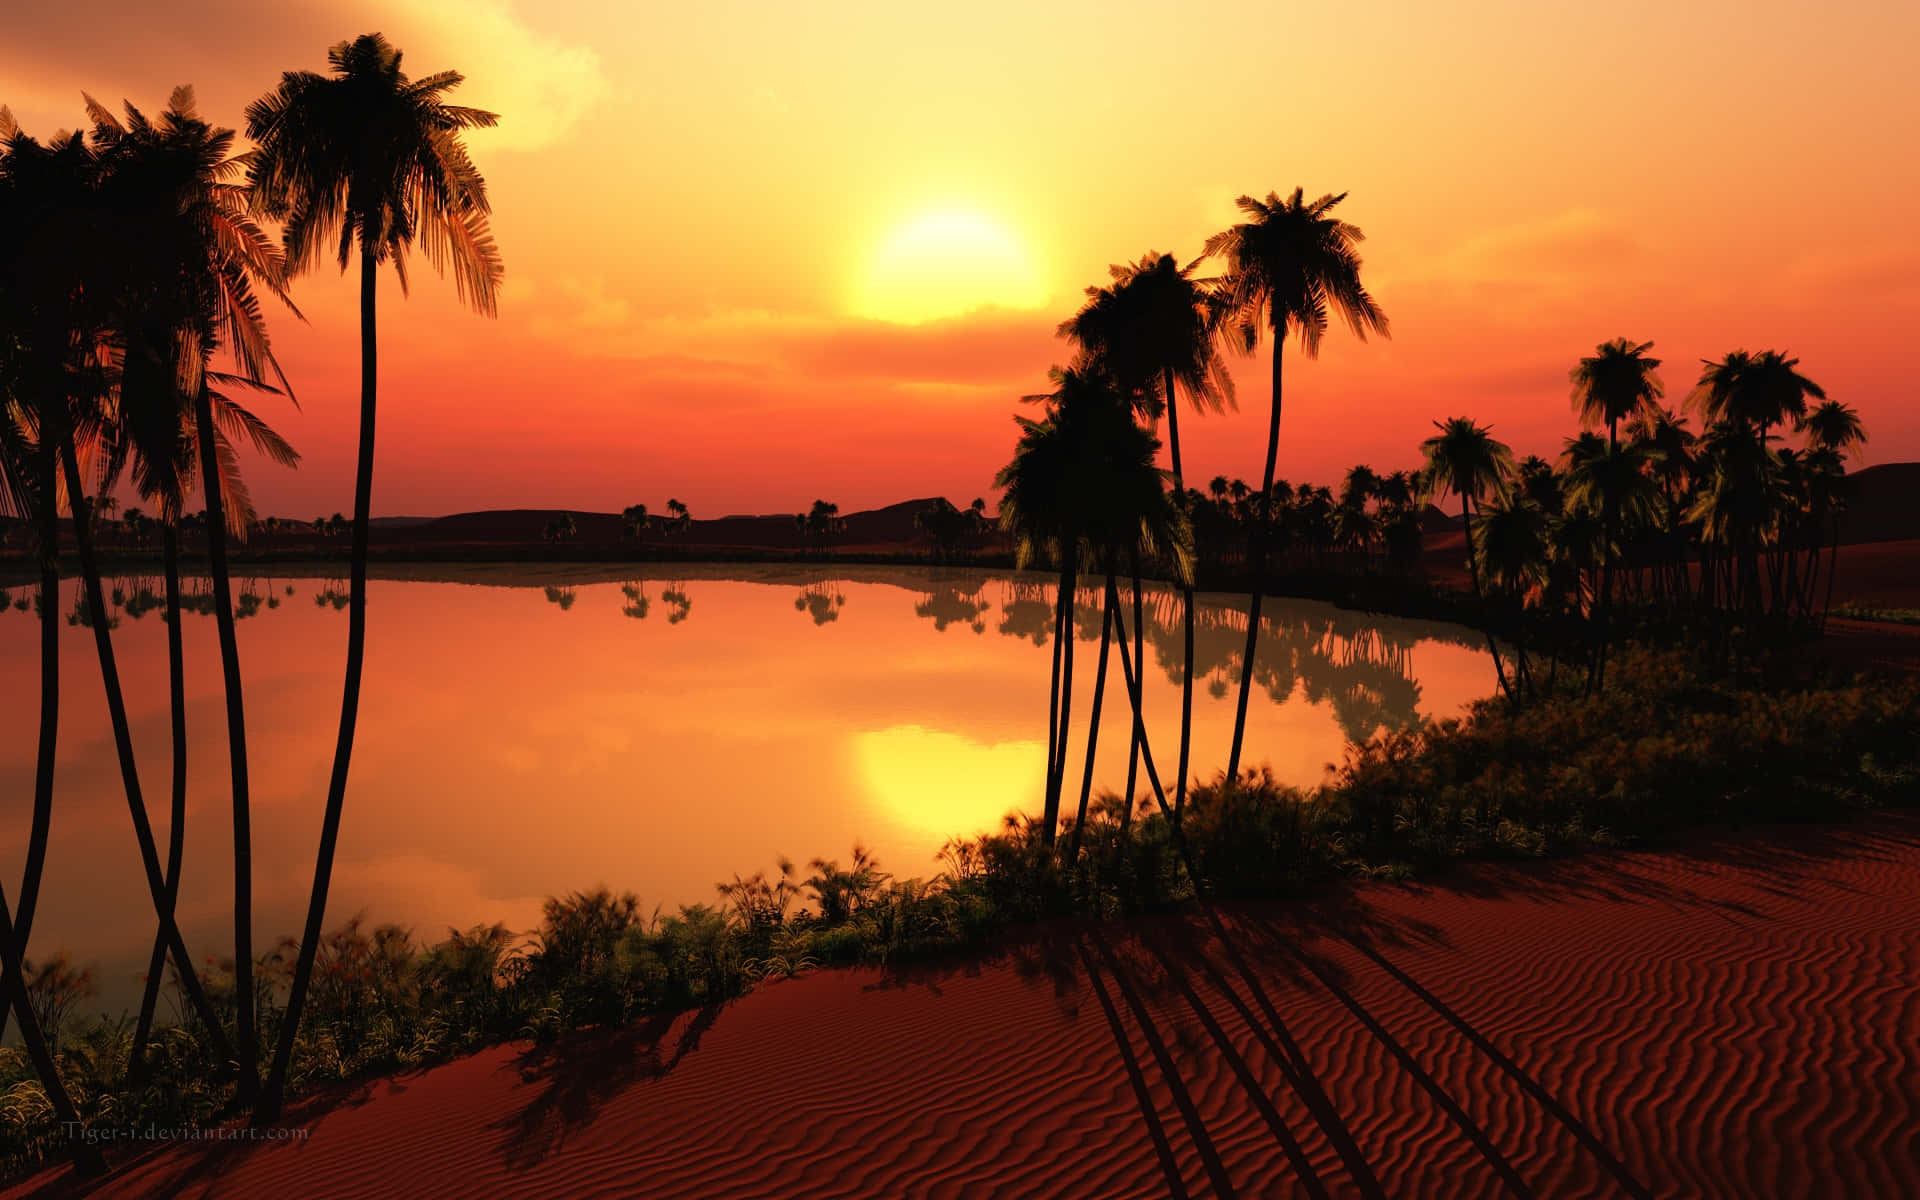 Enjoy the beautiful palm tree view on your desktop Wallpaper